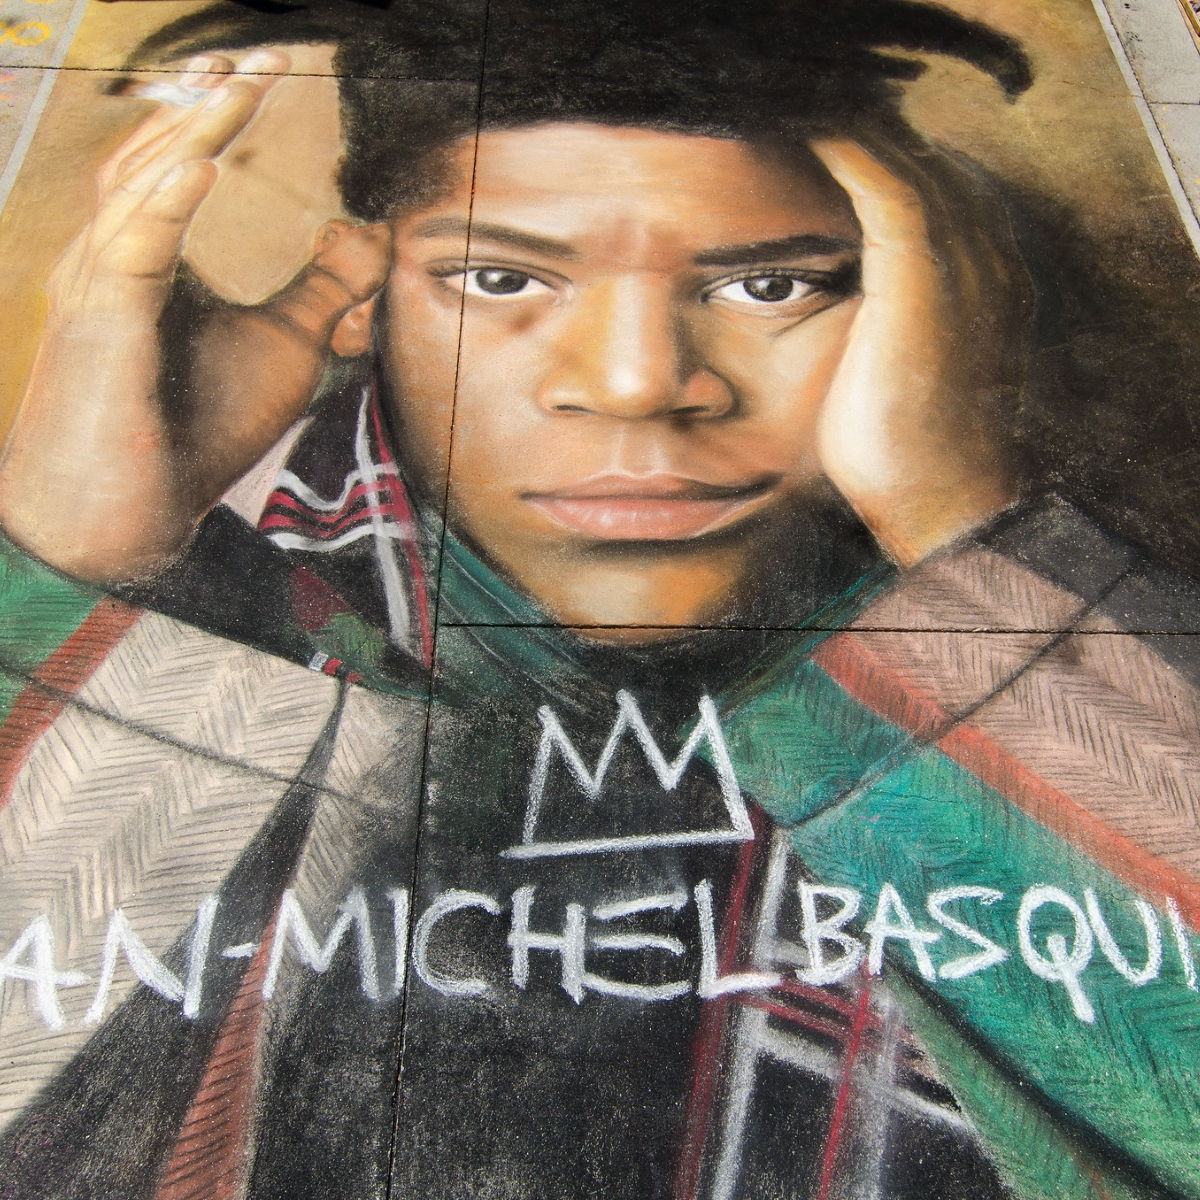 Basquiat Paintings Bio Ideas Theartstory